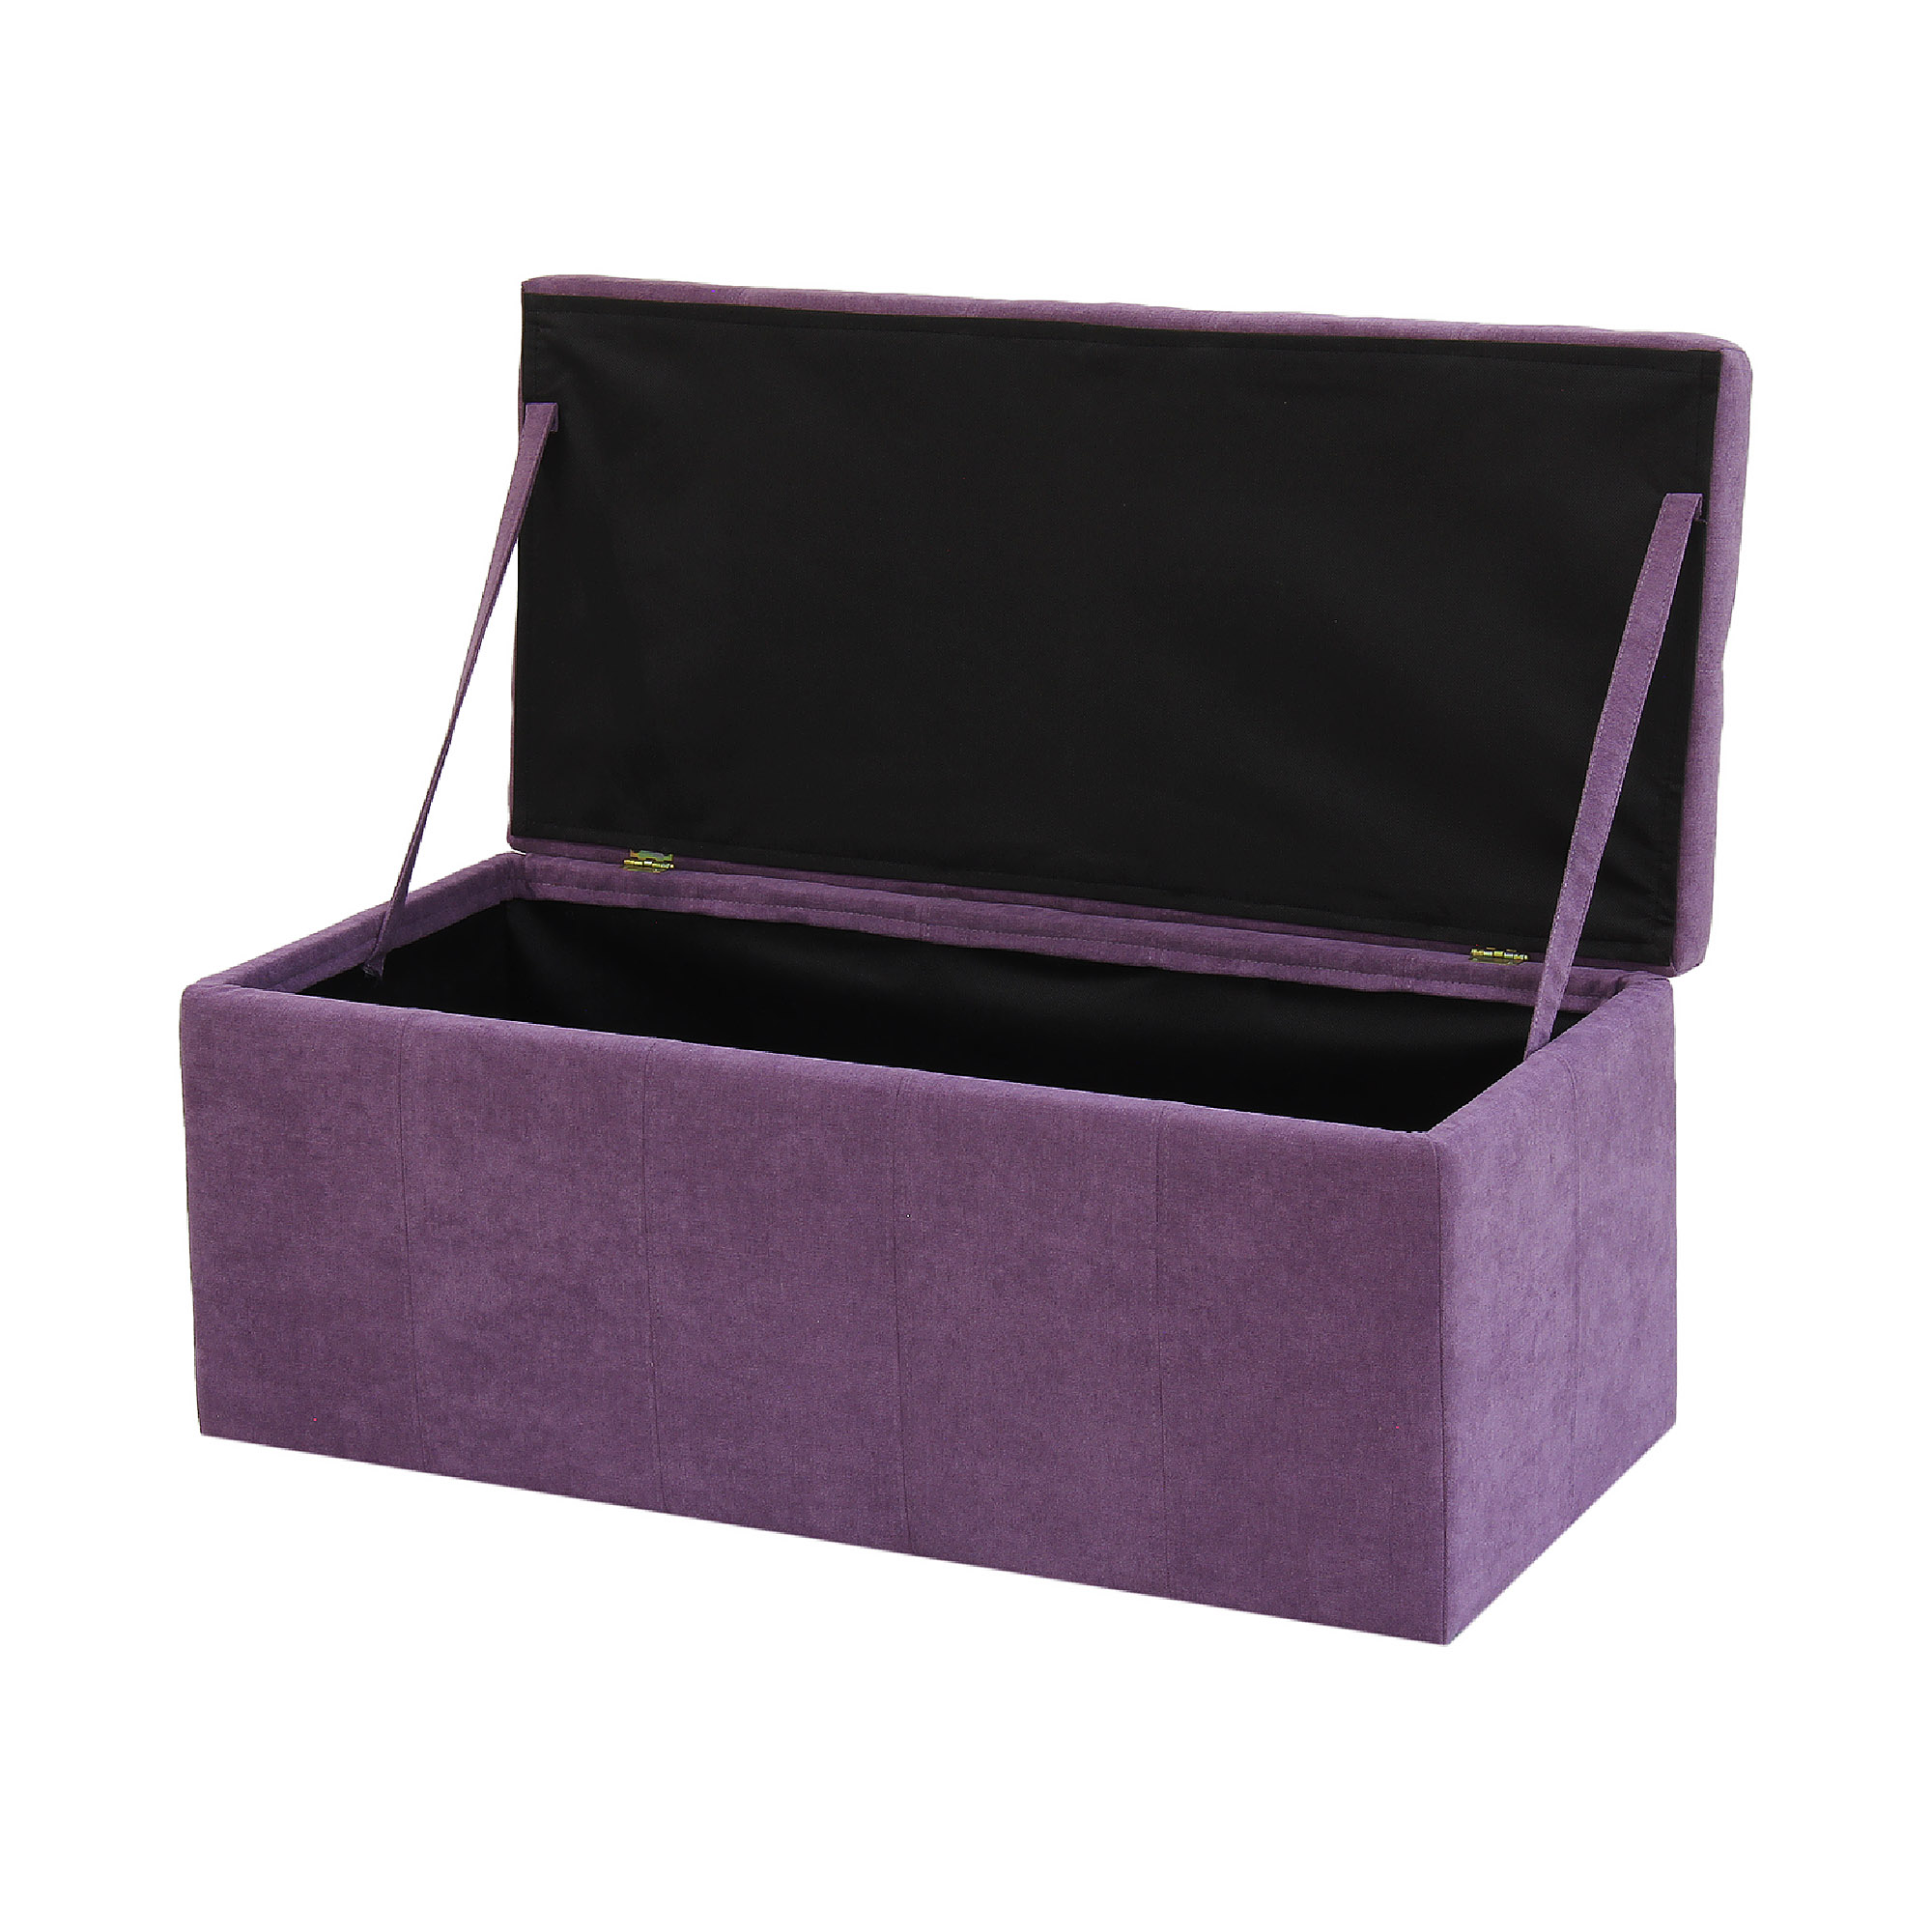 Банкетка Dreambag лонг фиолетовый велюр 100х46х46, размер 100х46х46 см - фото 4